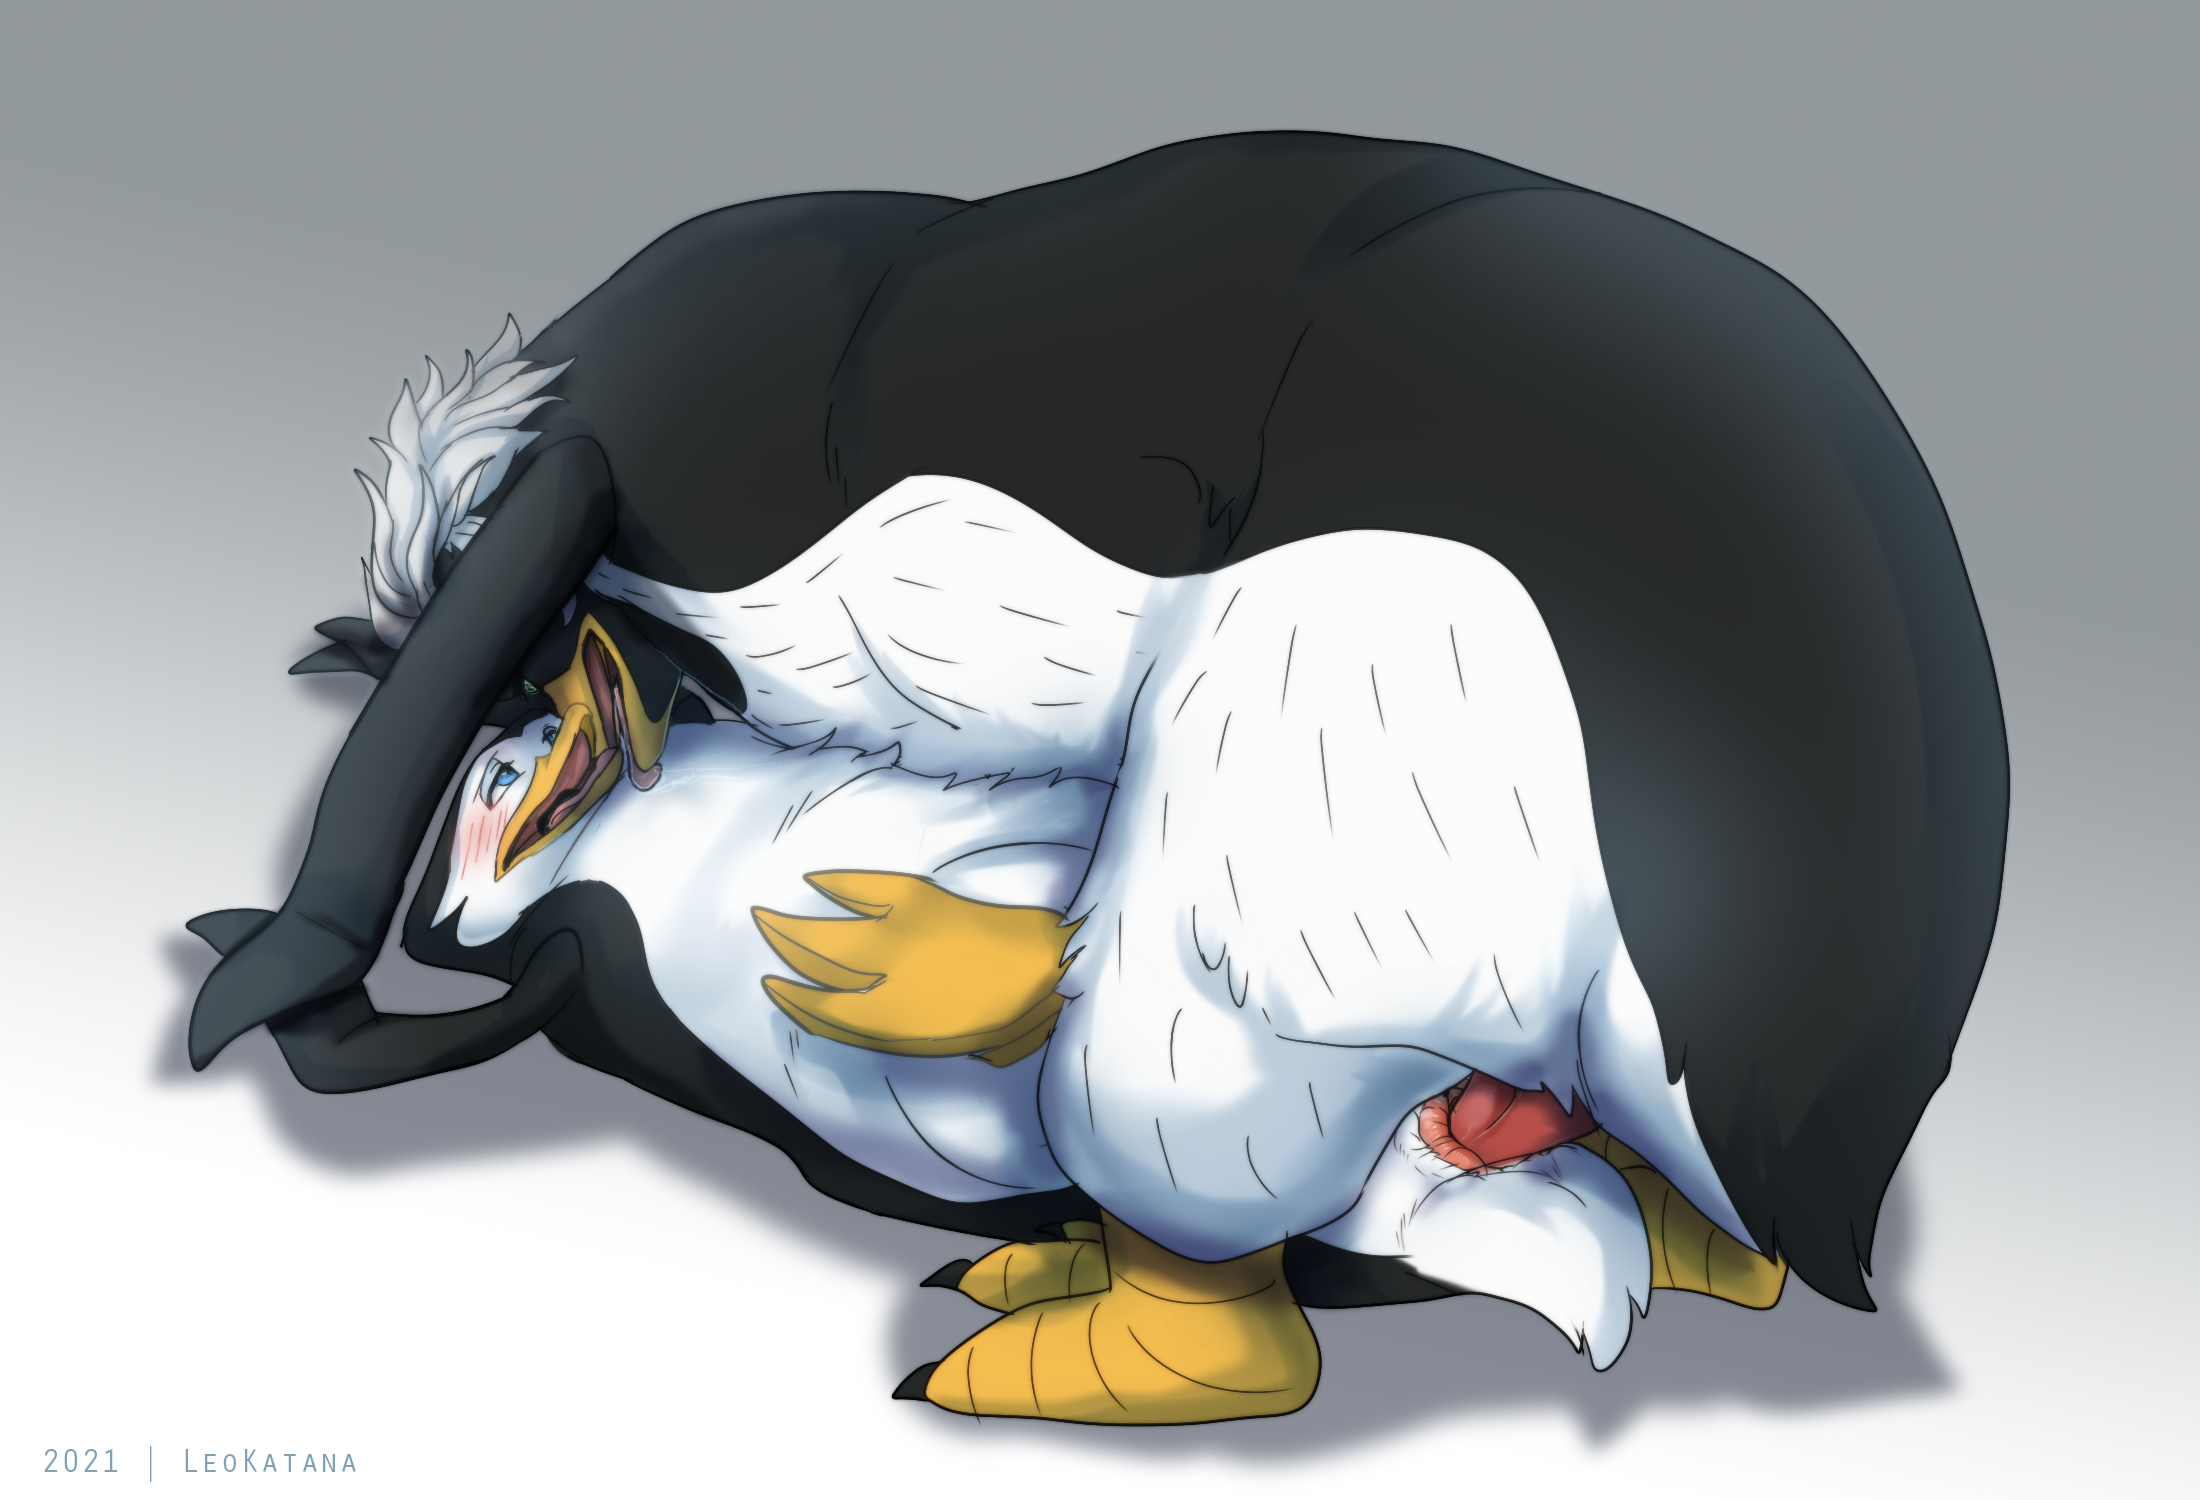 Penguin e621